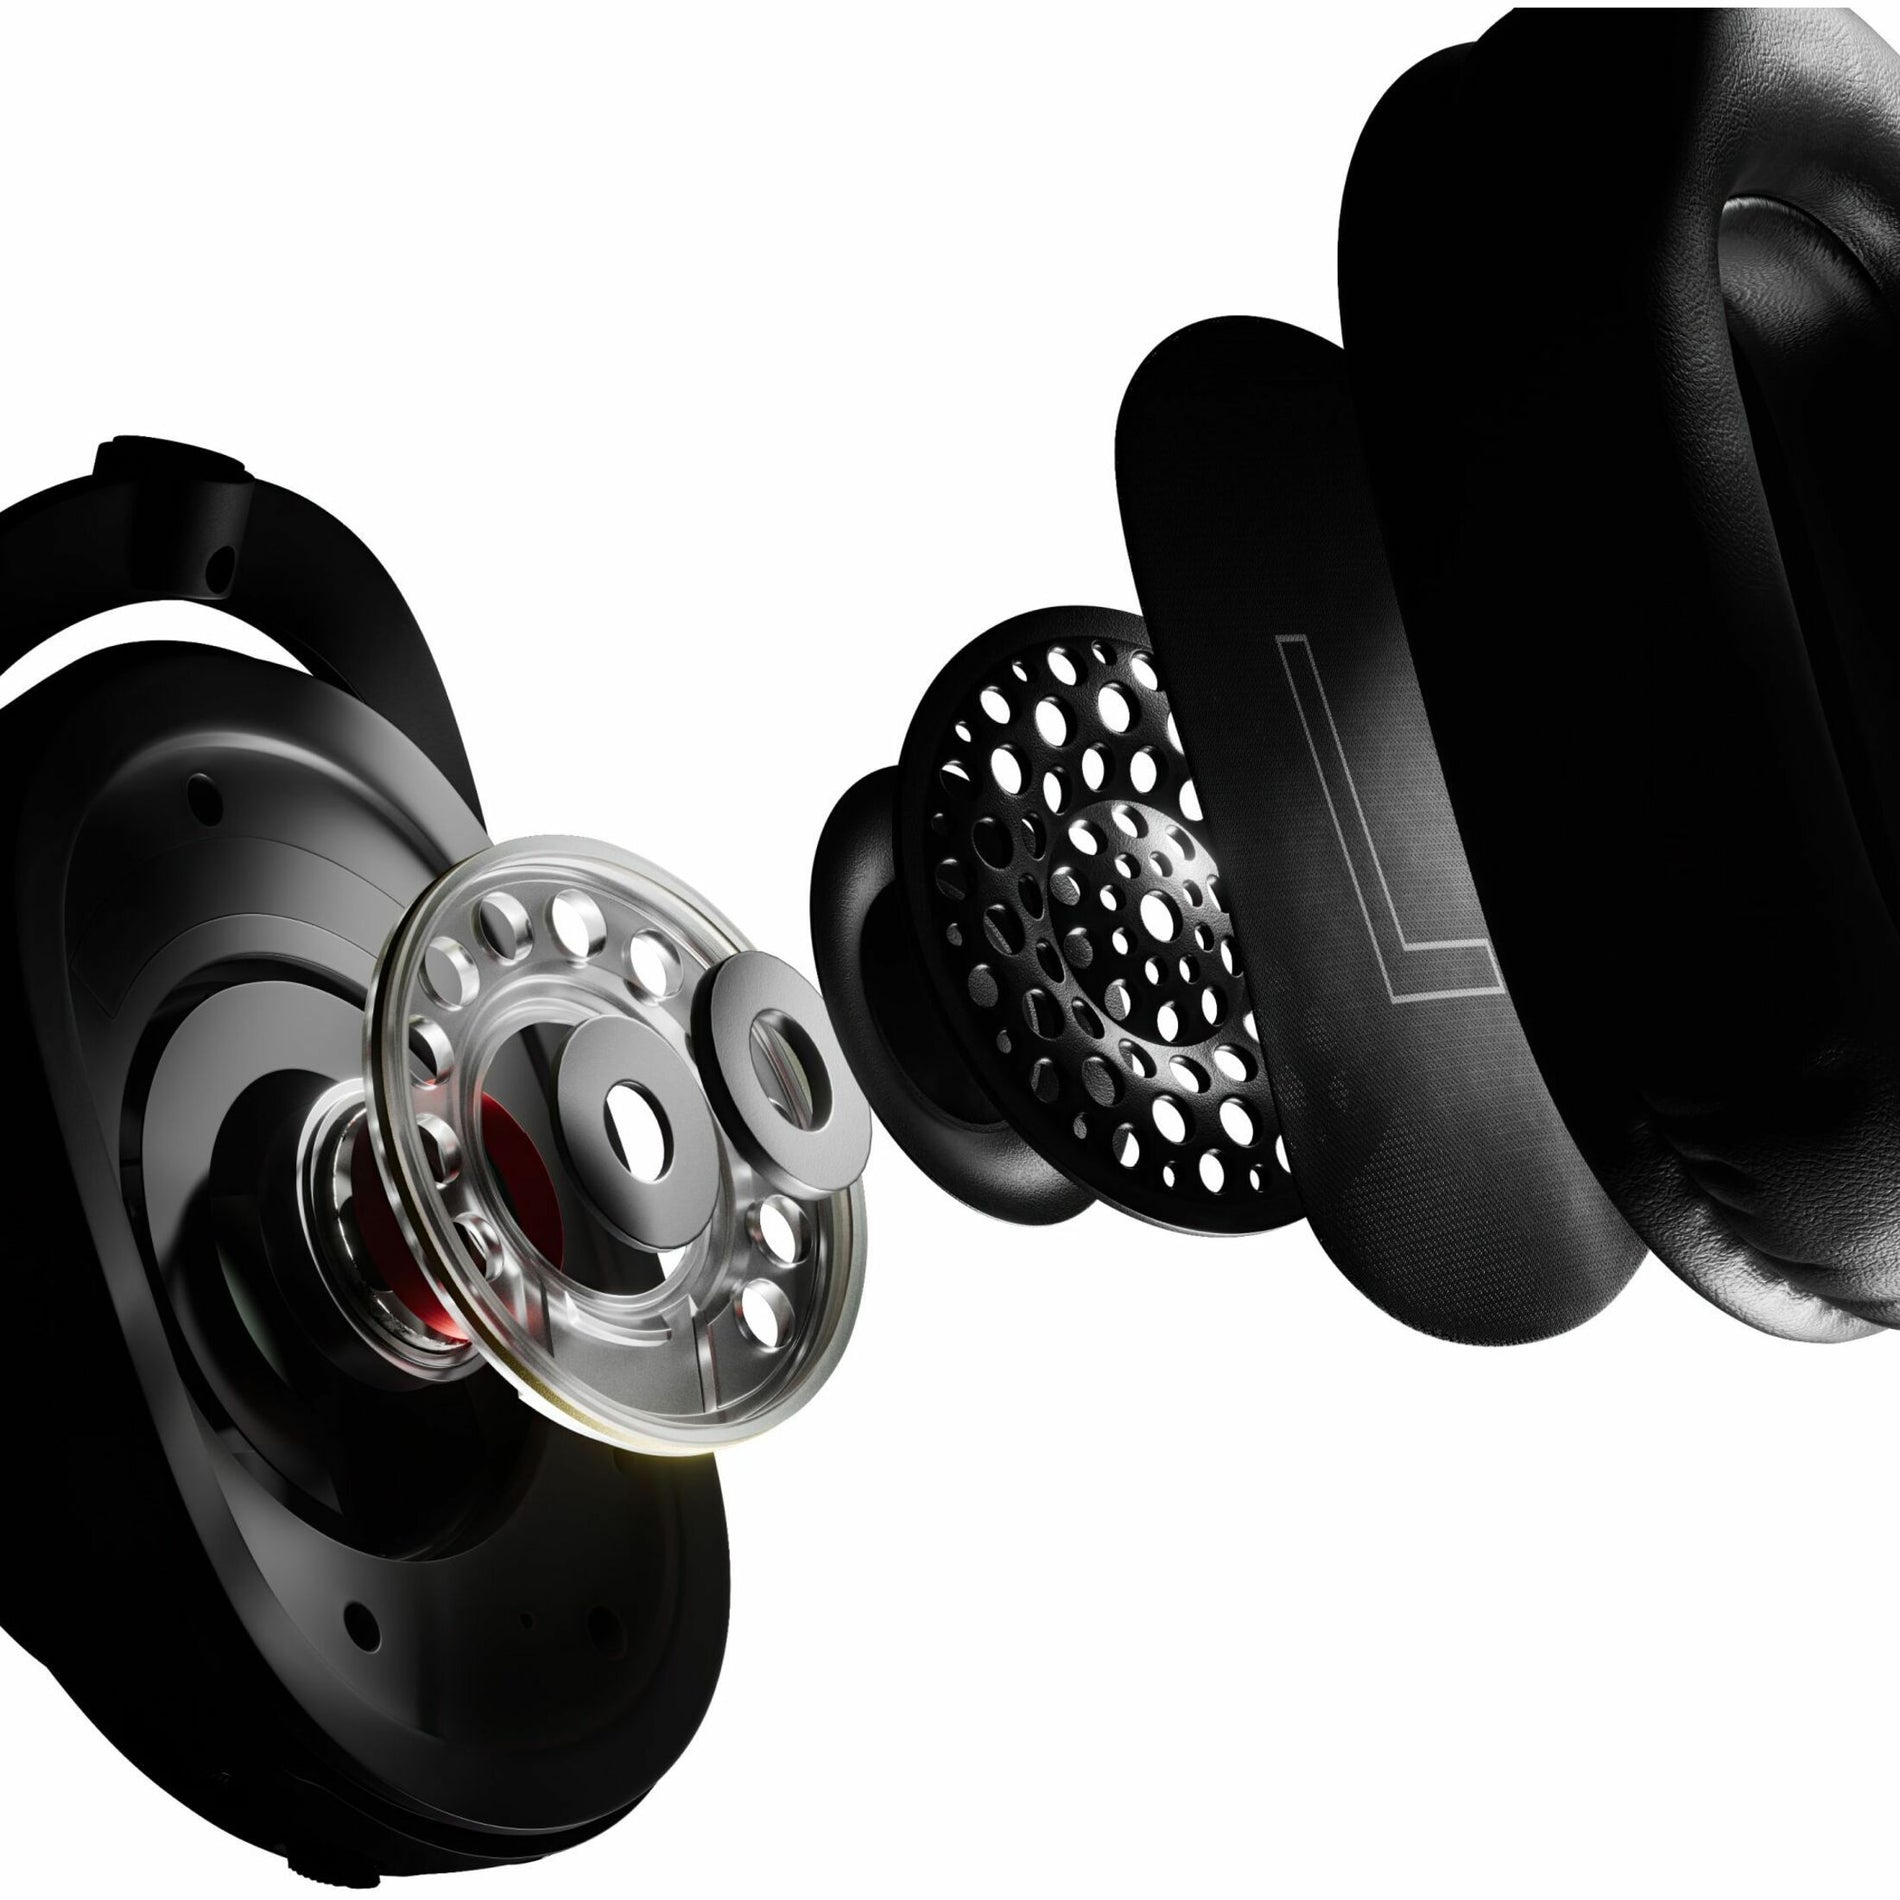 Logitech G 981-001268 PRO X 2 Gaming Headset, Durable, Comfortable, 7.1 Surround Sound, Wireless Technology